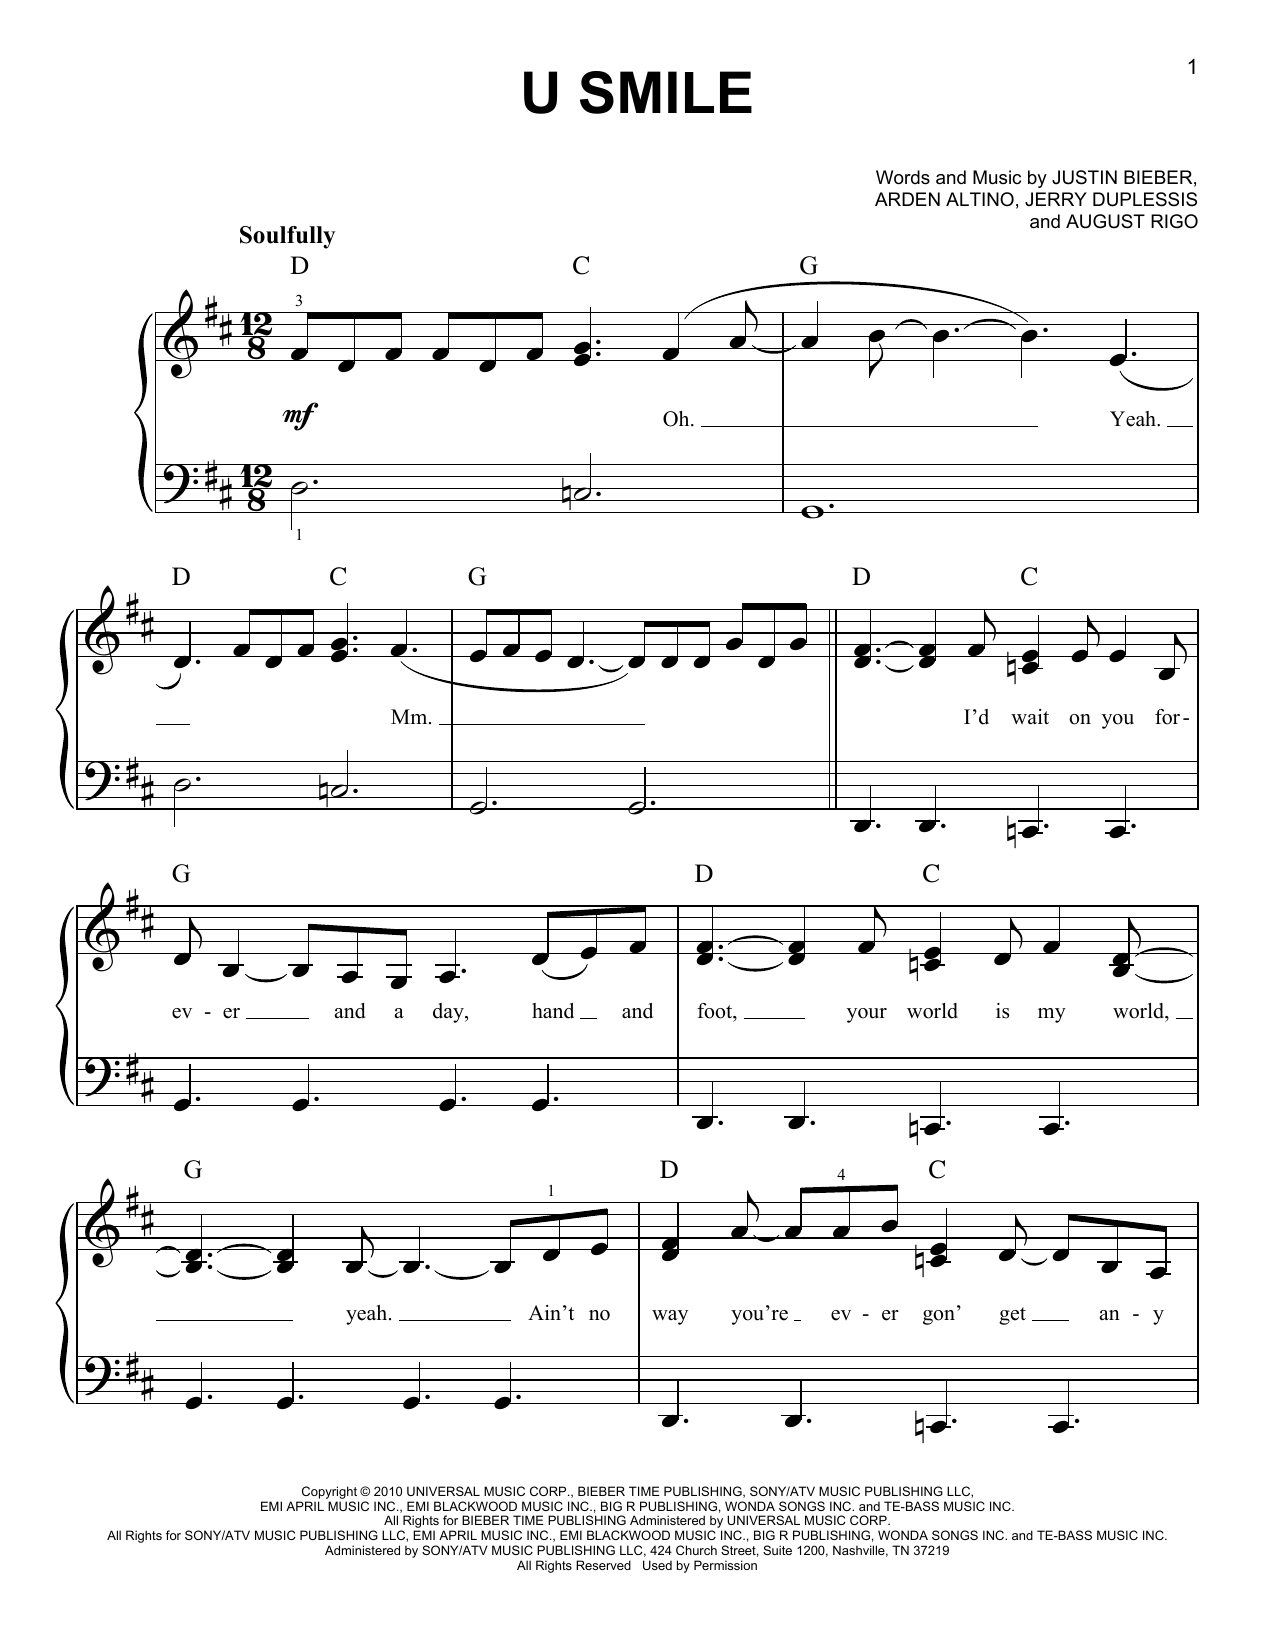 Justin Bieber U Smile Sheet Music Notes & Chords for Piano (Big Notes) - Download or Print PDF